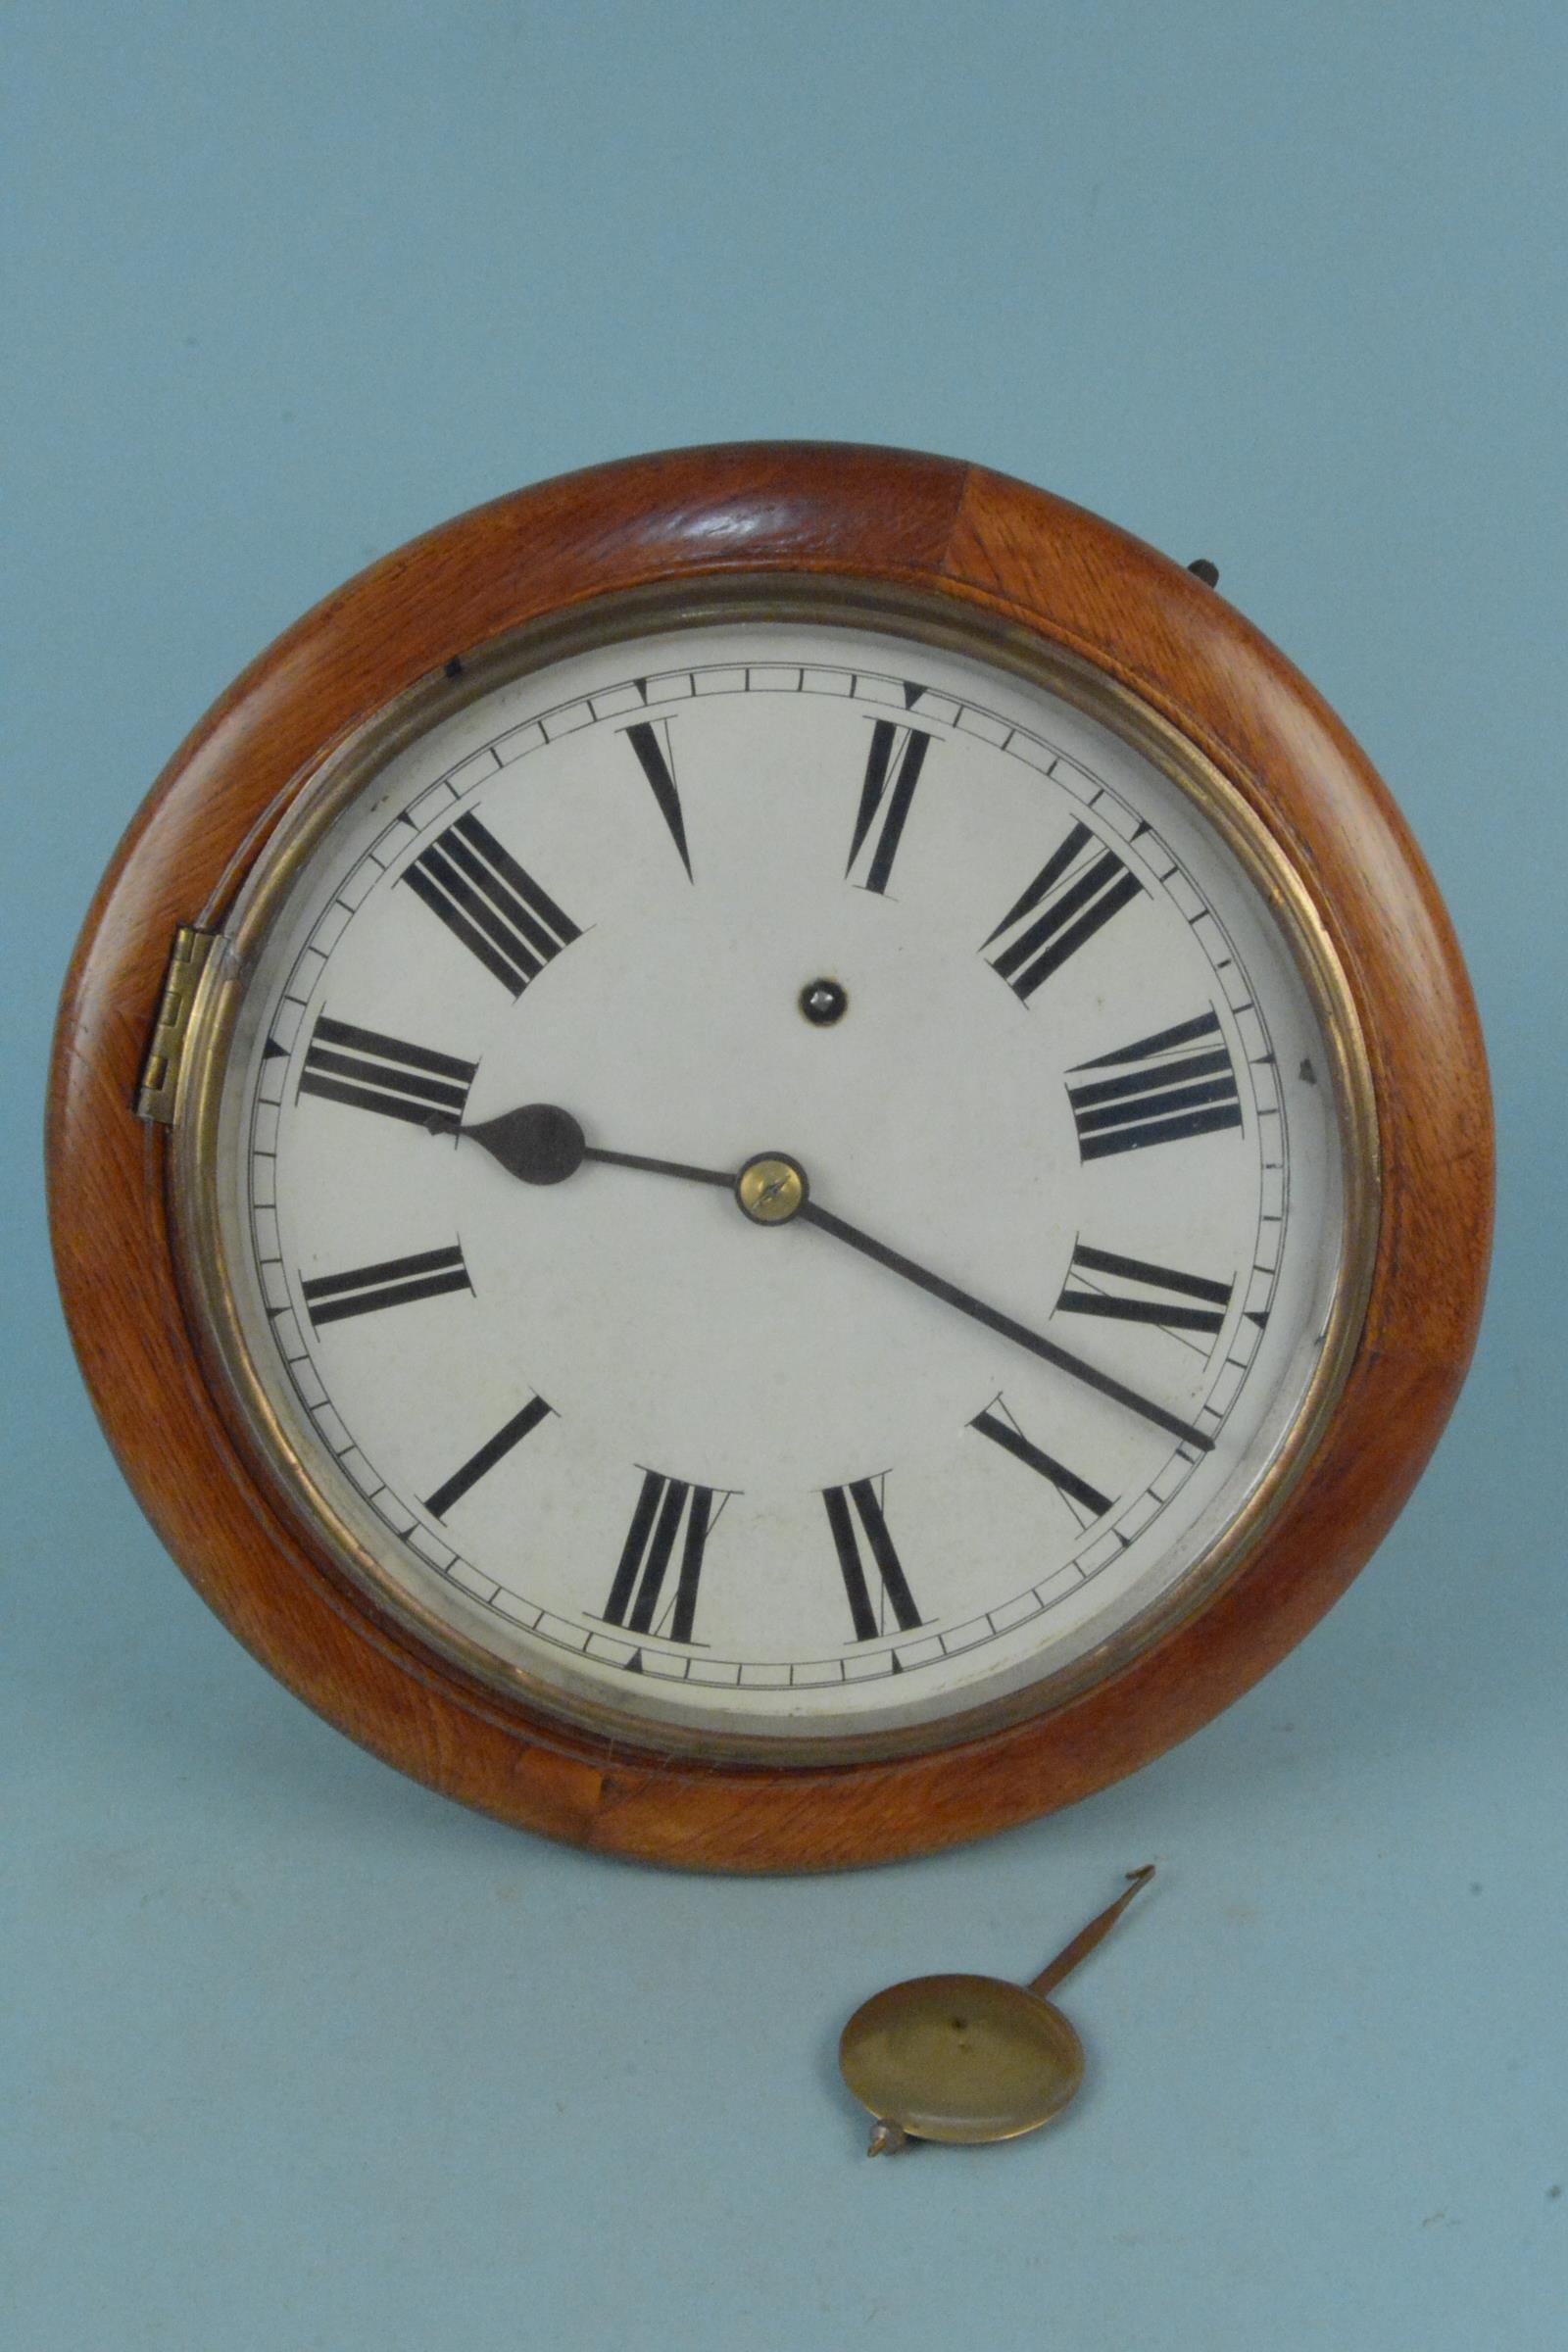 A vintage wooden cased W & H Sch (Winterhalder & Hofmeir of Schwarzenbach) wall clock with pendulum